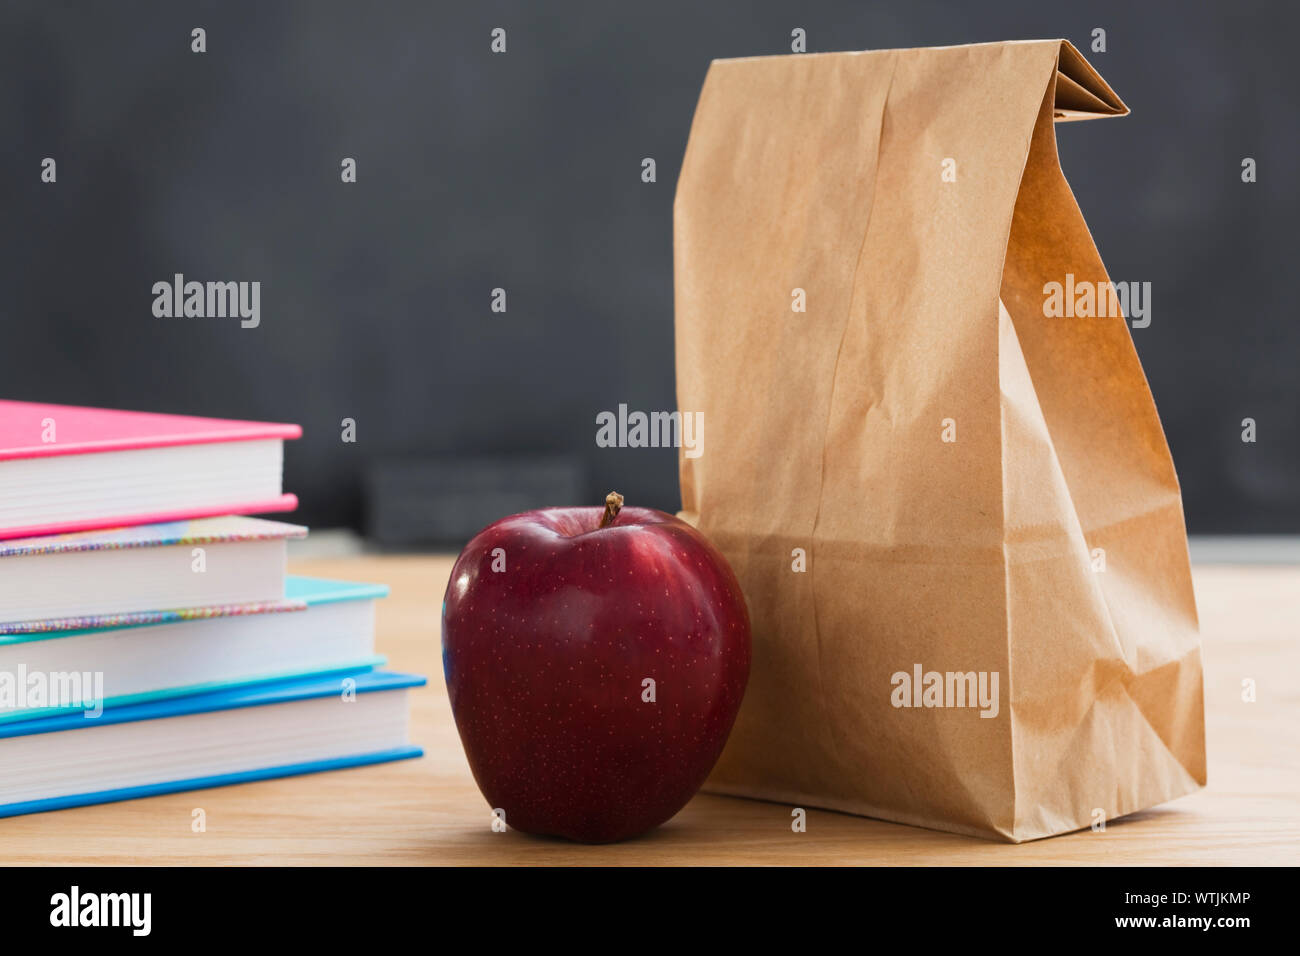 School meal in paper bag on desk Stock Photo